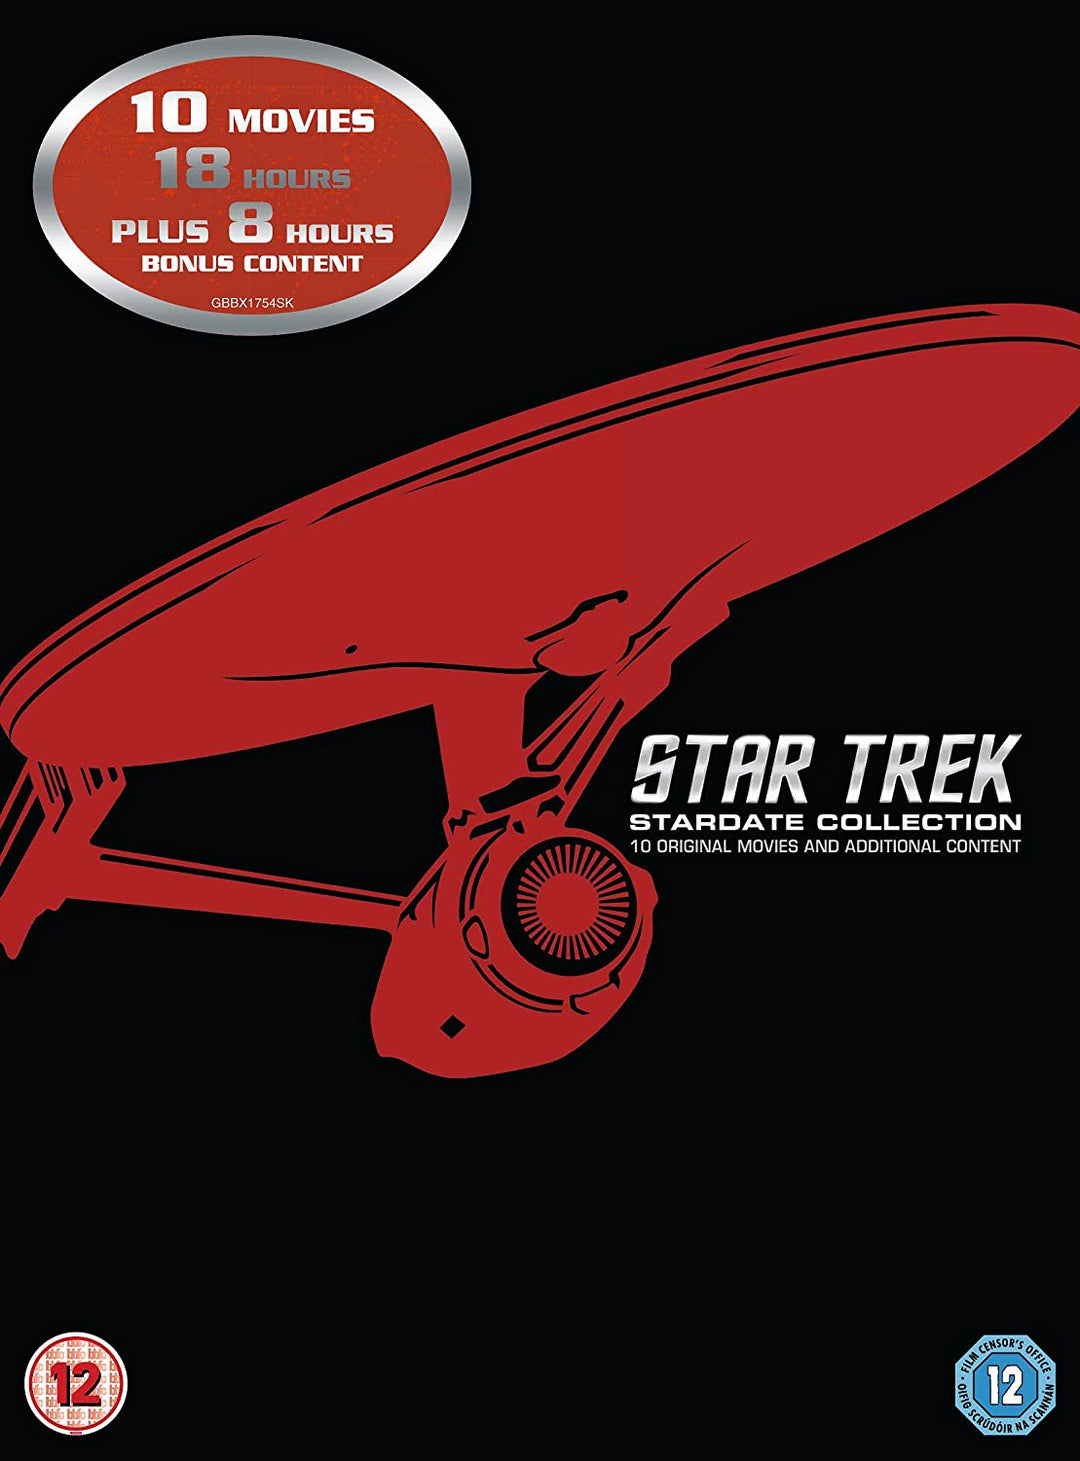 Star Trek: Stardate Collection - The Movies 1-10 ed) [1979]  -Sci-fi [DVD]